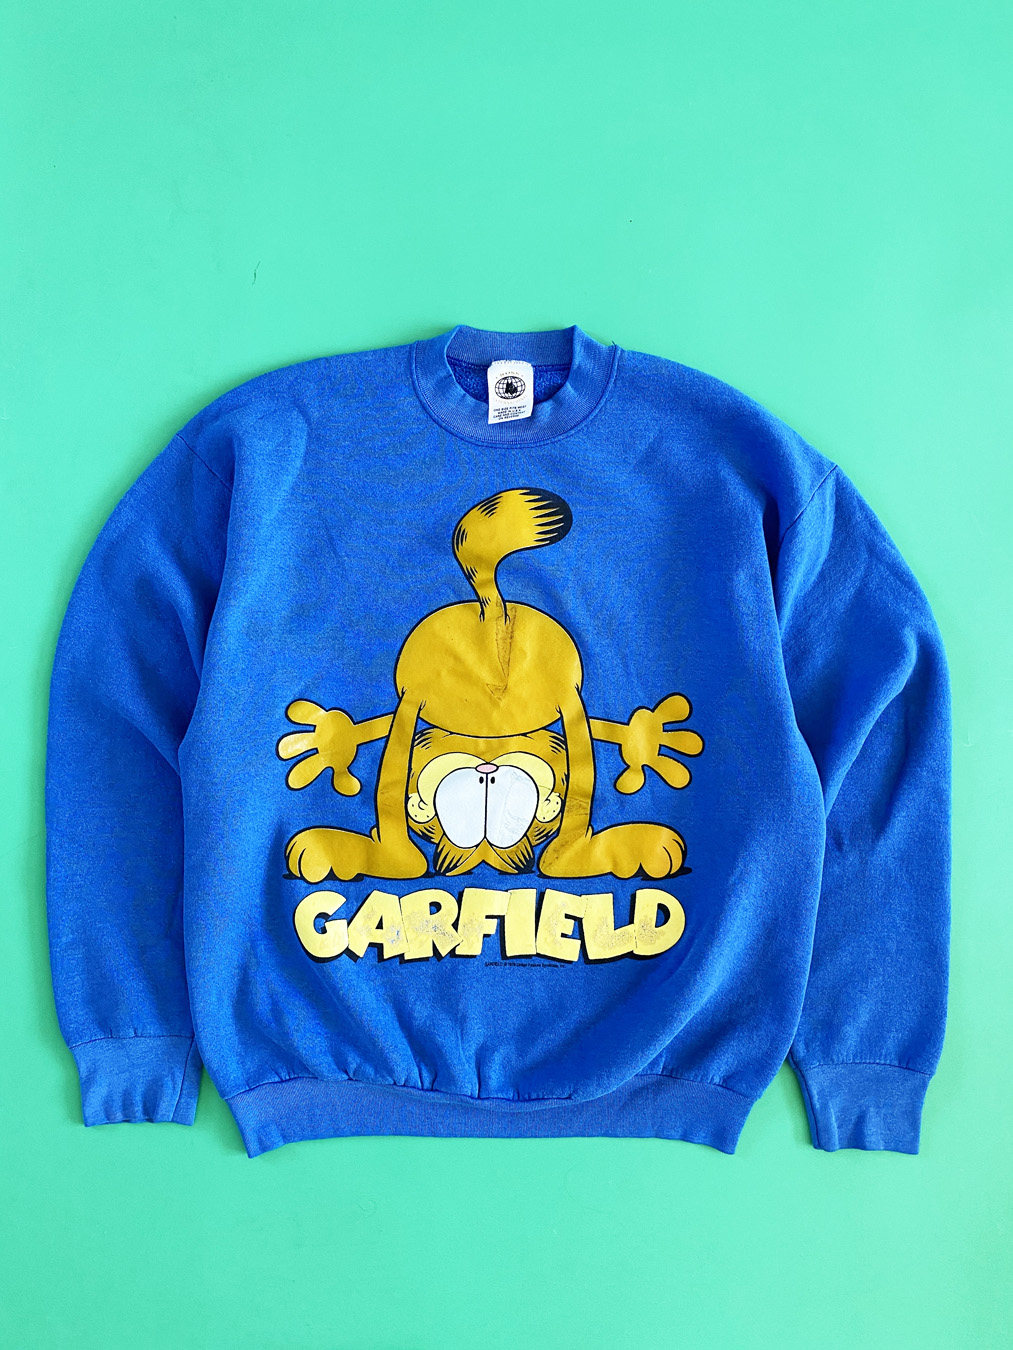 90s Garfield Cartoon Blue Crewneck Sweater - 5 Star Vintage